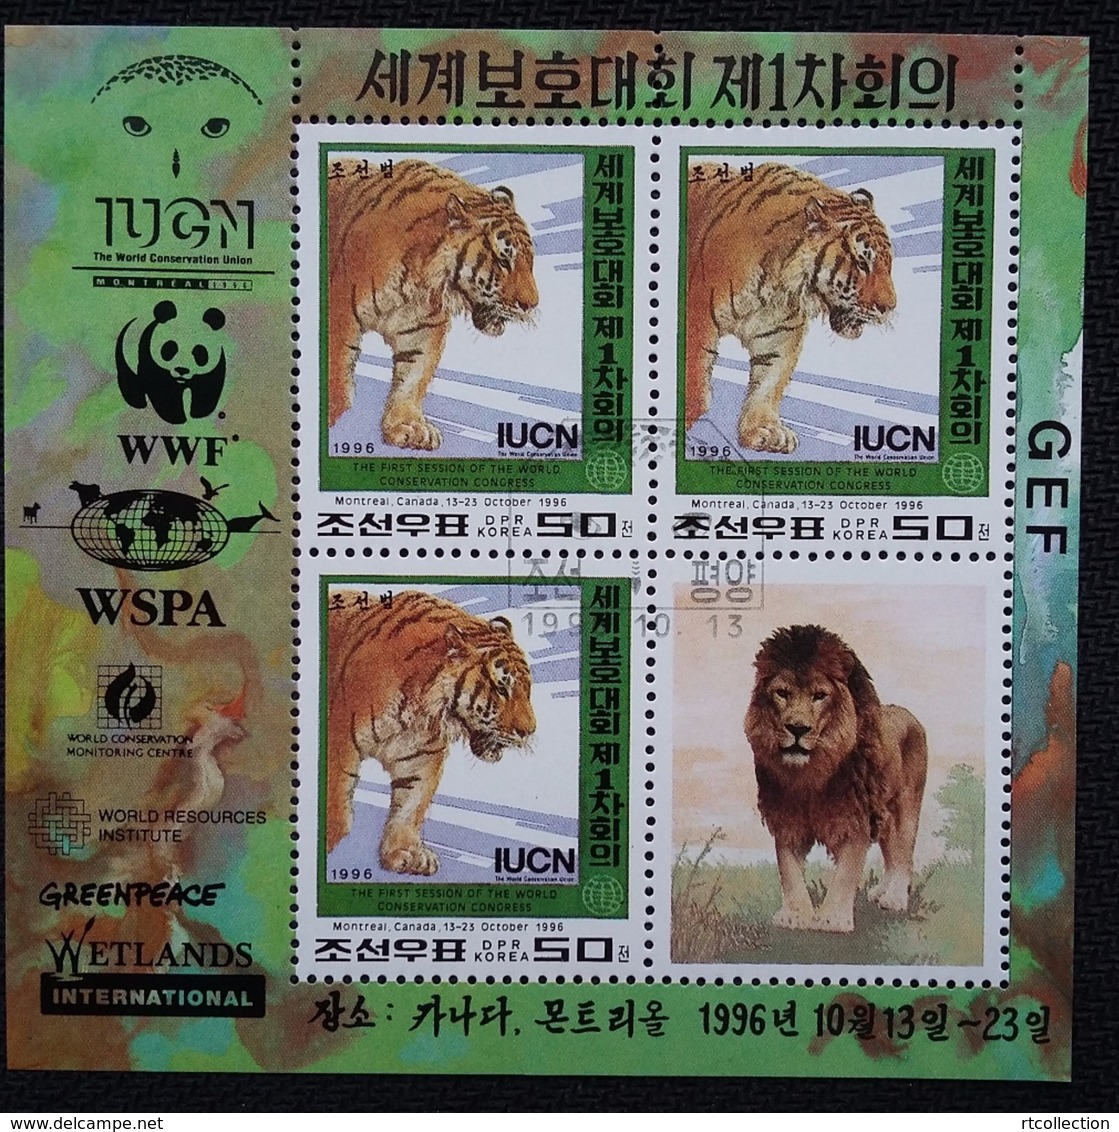 Korea 1996 M/S Wild Animals Nature Conservation Tiger Big Cats Lion Leo W.W.F. WWF IUCN Organizations Stamps CTO Mi 3874 - Used Stamps